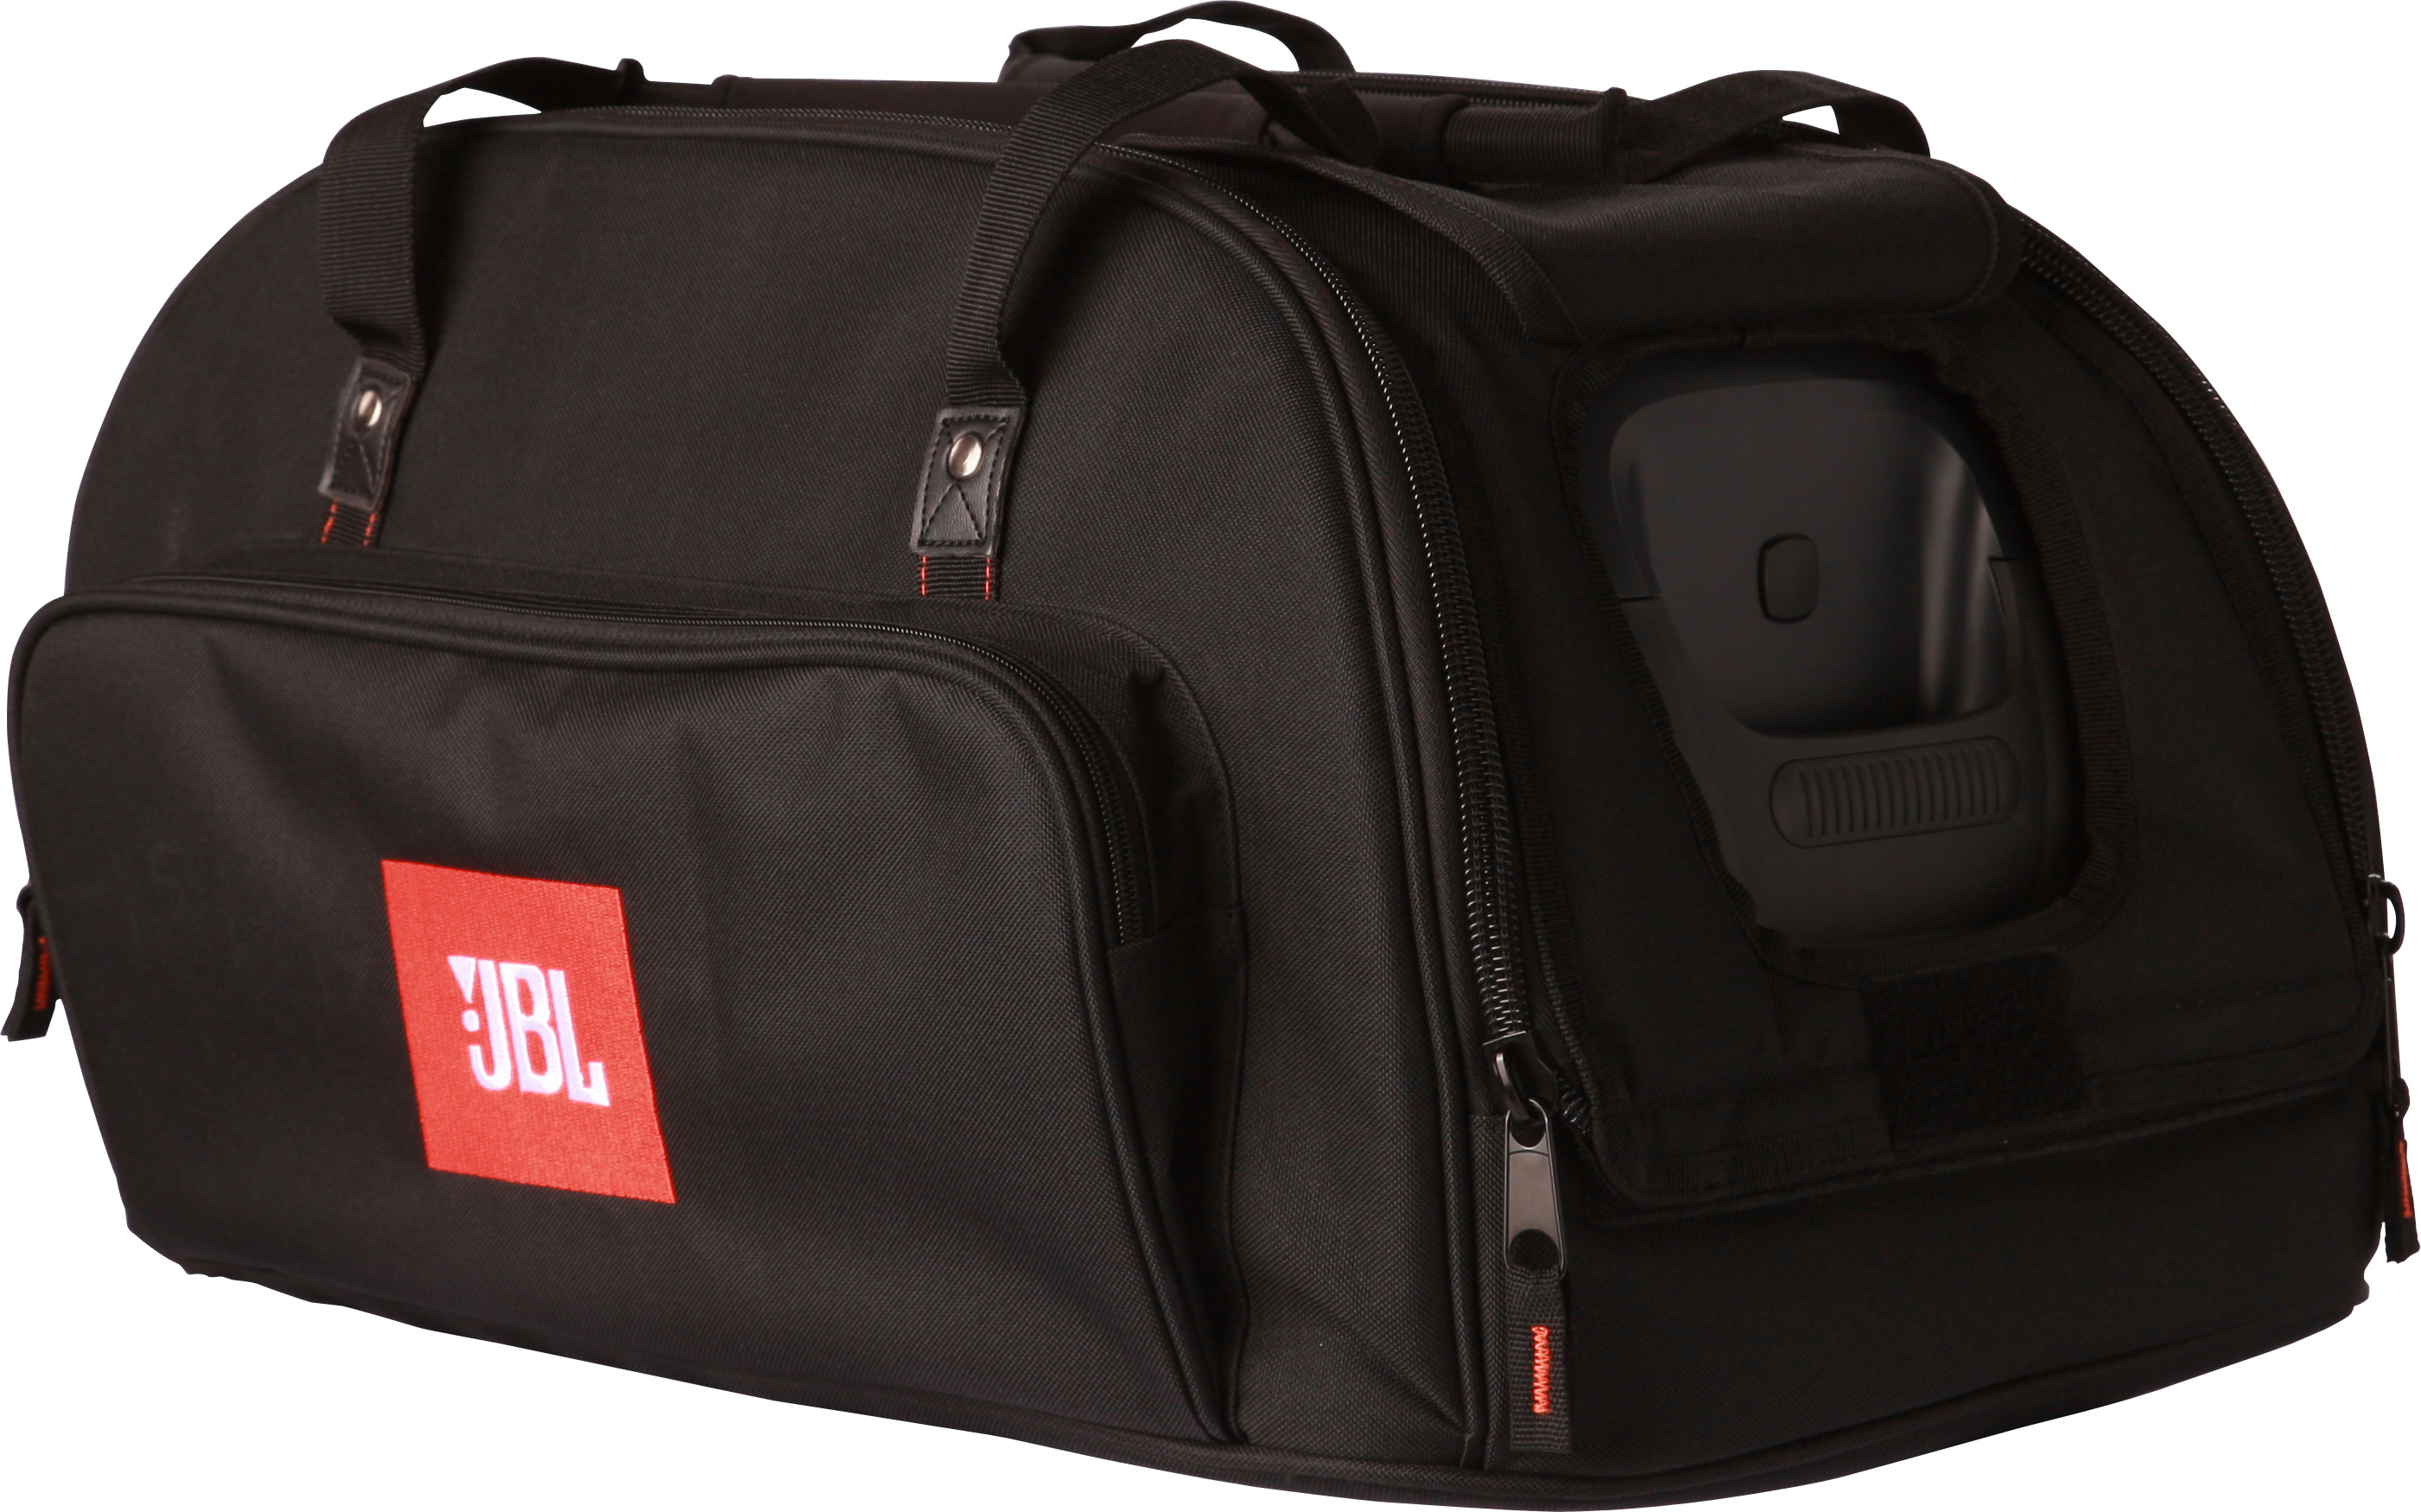 JBL JBL EON10BAGDLX Carry Bag for EON 510 Speakers